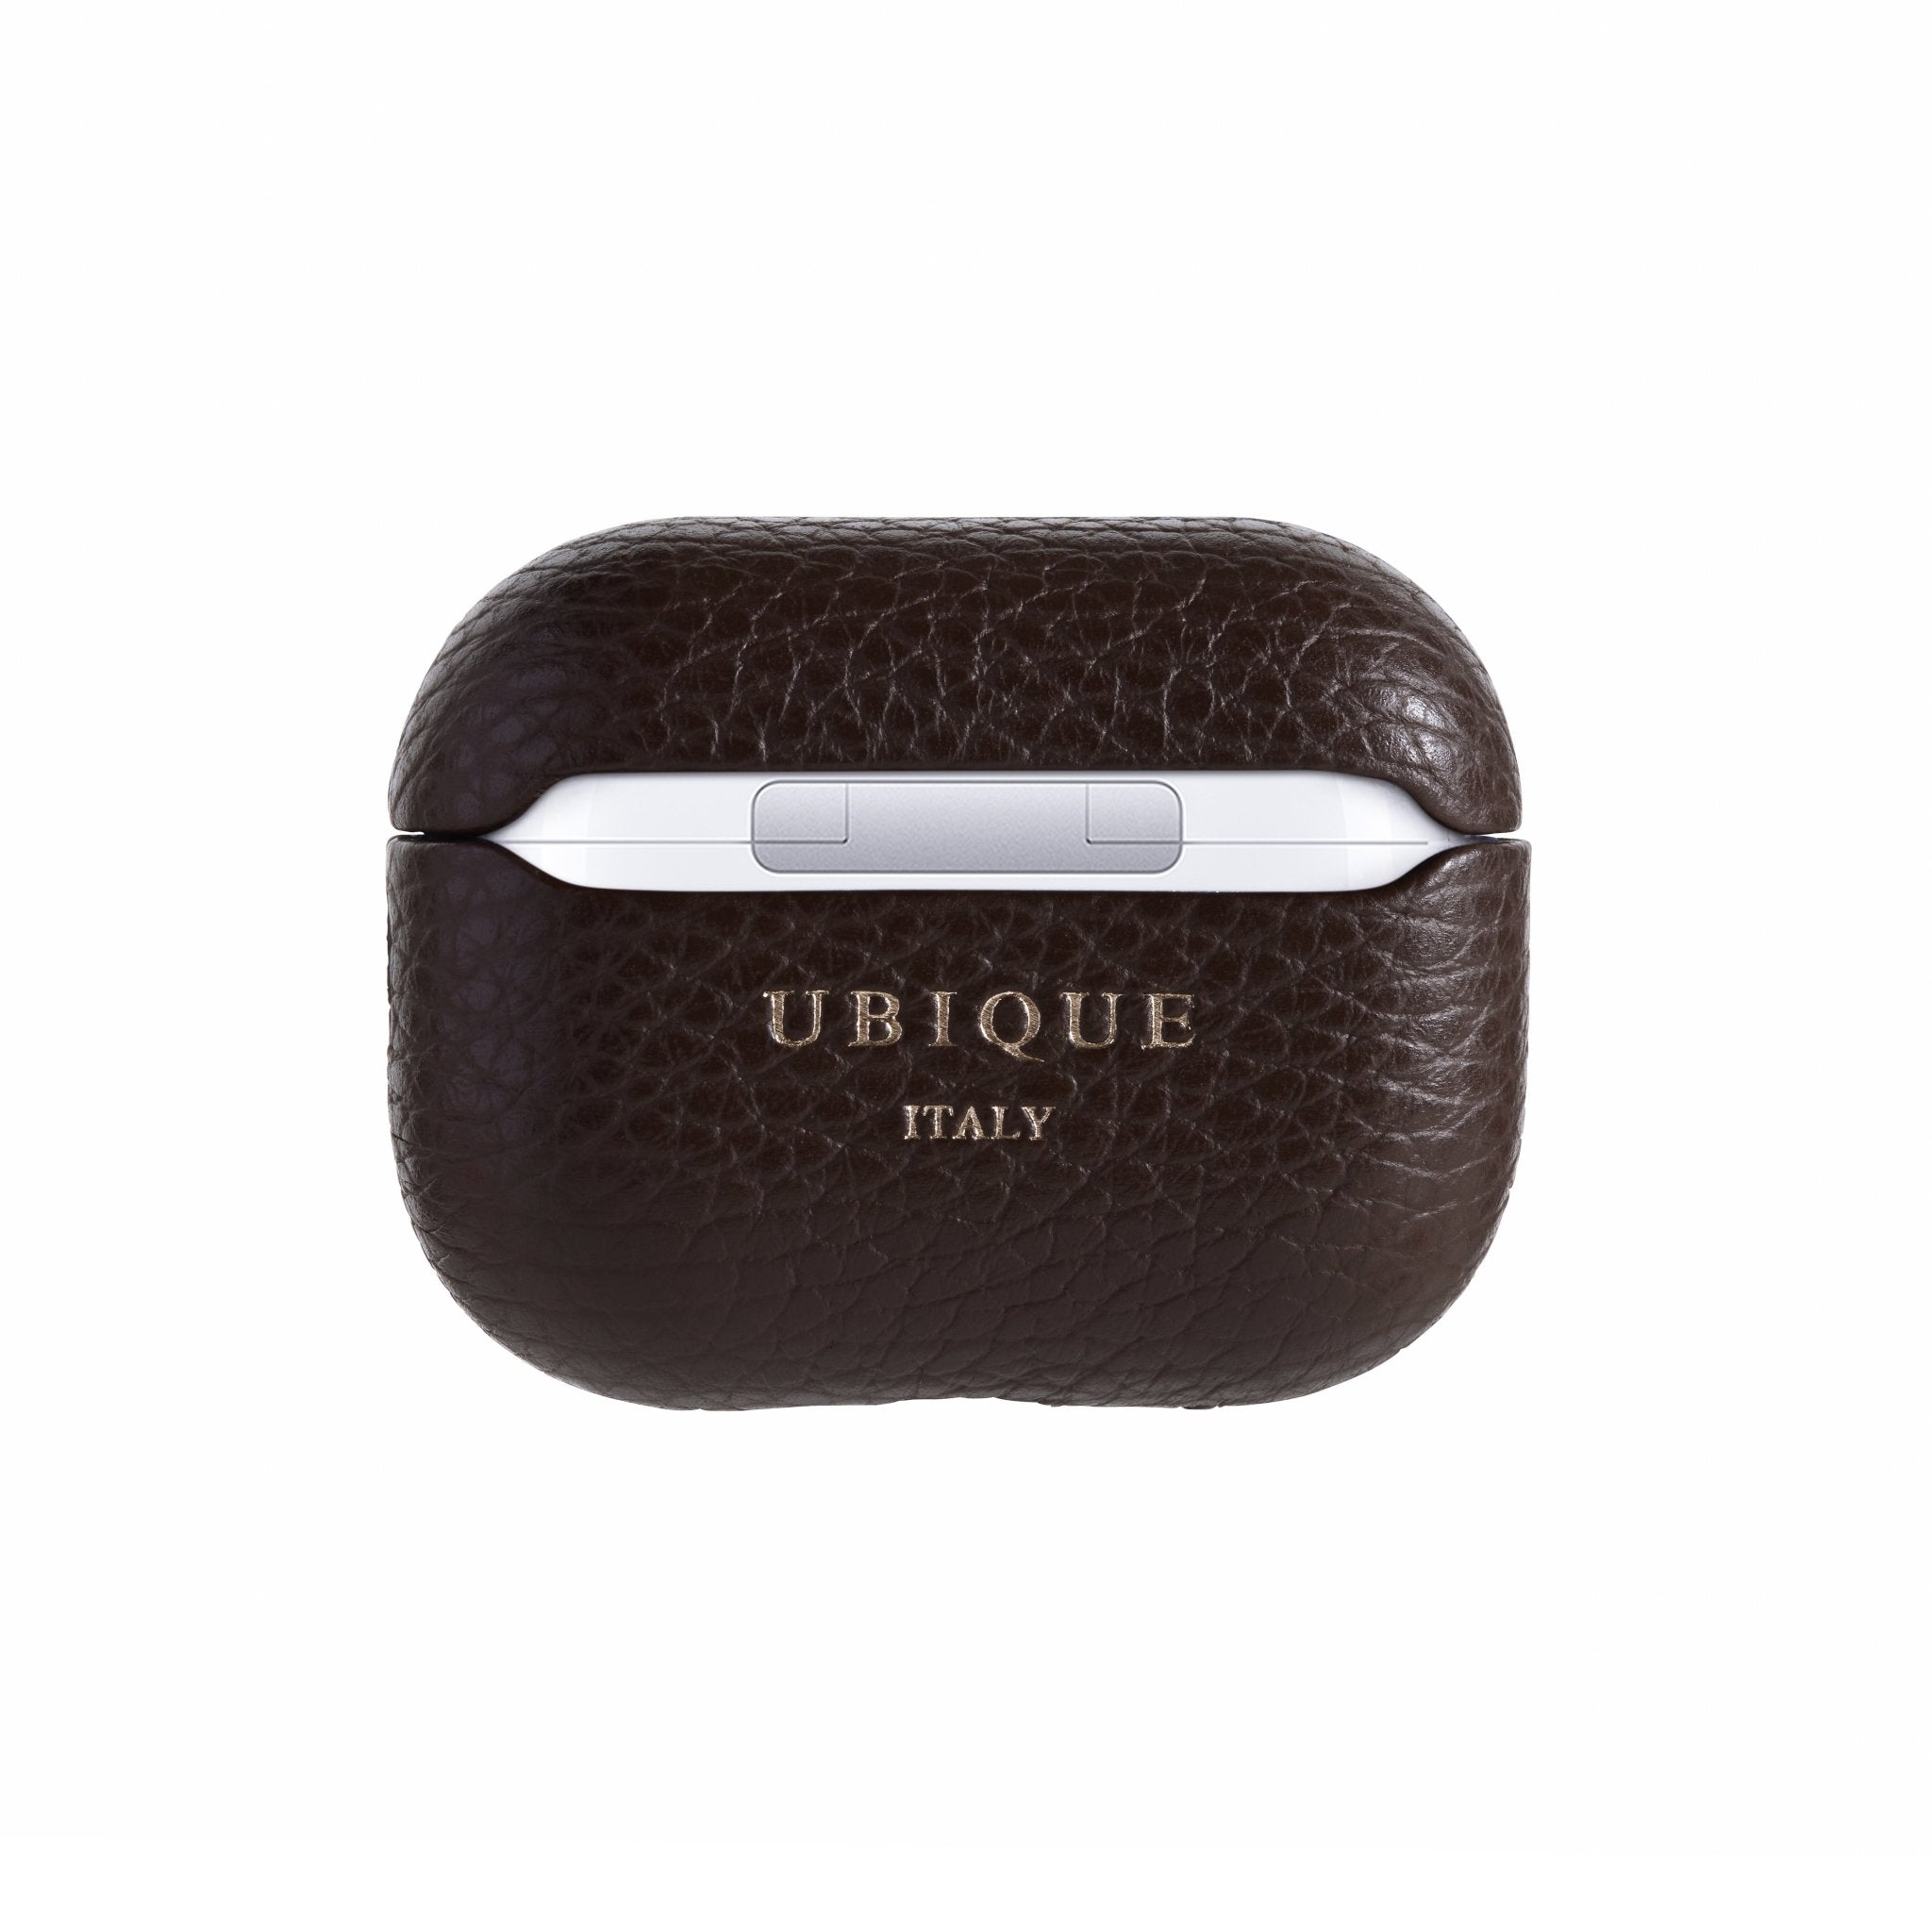 Ubique Italy Luxury AirPods Pro 2 Case Pebble Grain Leather Dark Walnut Back